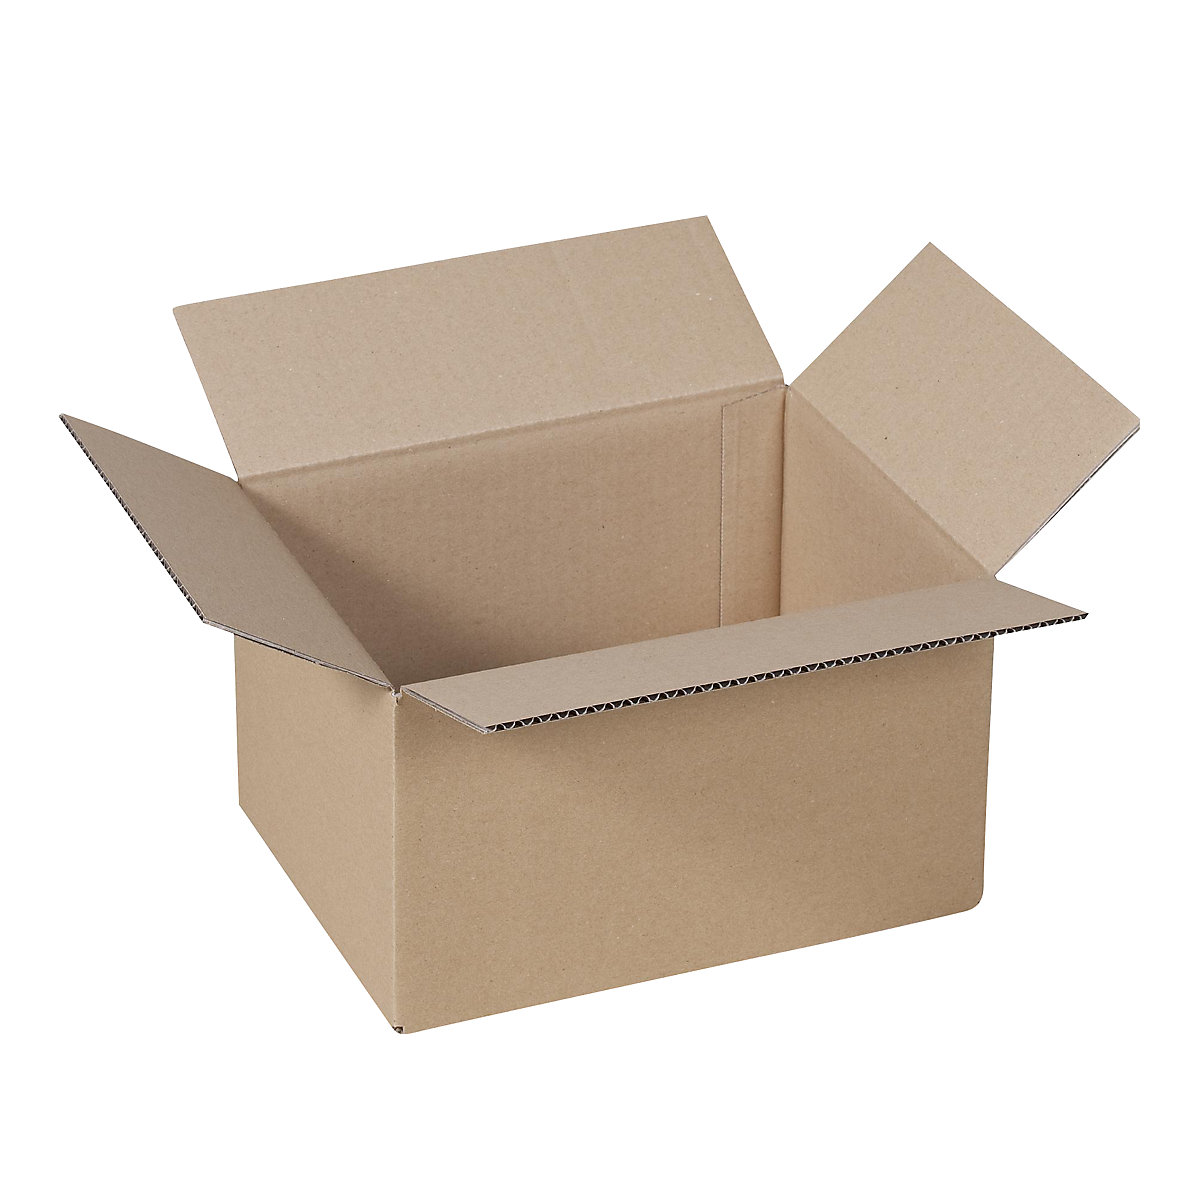 Folding cardboard box, FEFCO 0201, made of single fluted cardboard, internal dimensions 260 x 180 x 140 mm, pack of 50-17